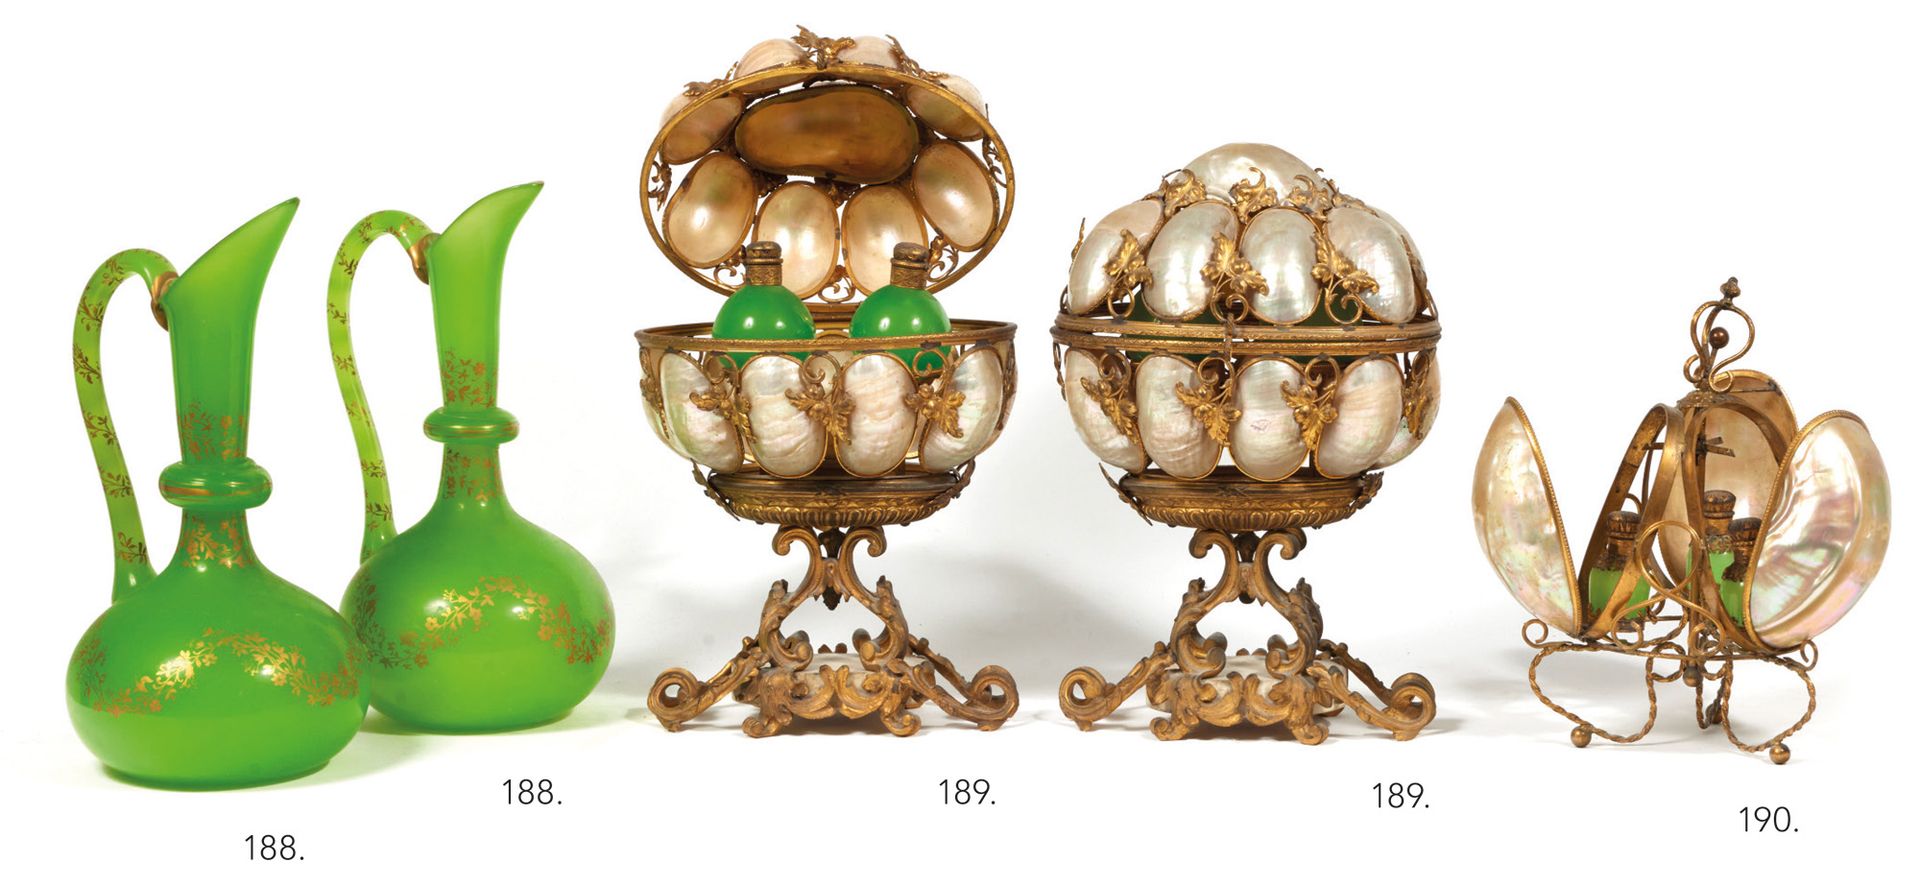 Porte-flacon 水瓶架

鎏金金属，装饰有交错的三个半壳，在花冠中打开，露出三个绿色乳白色的玻璃瓶。

N.III时期

高：27厘米

(损坏的手柄&hellip;